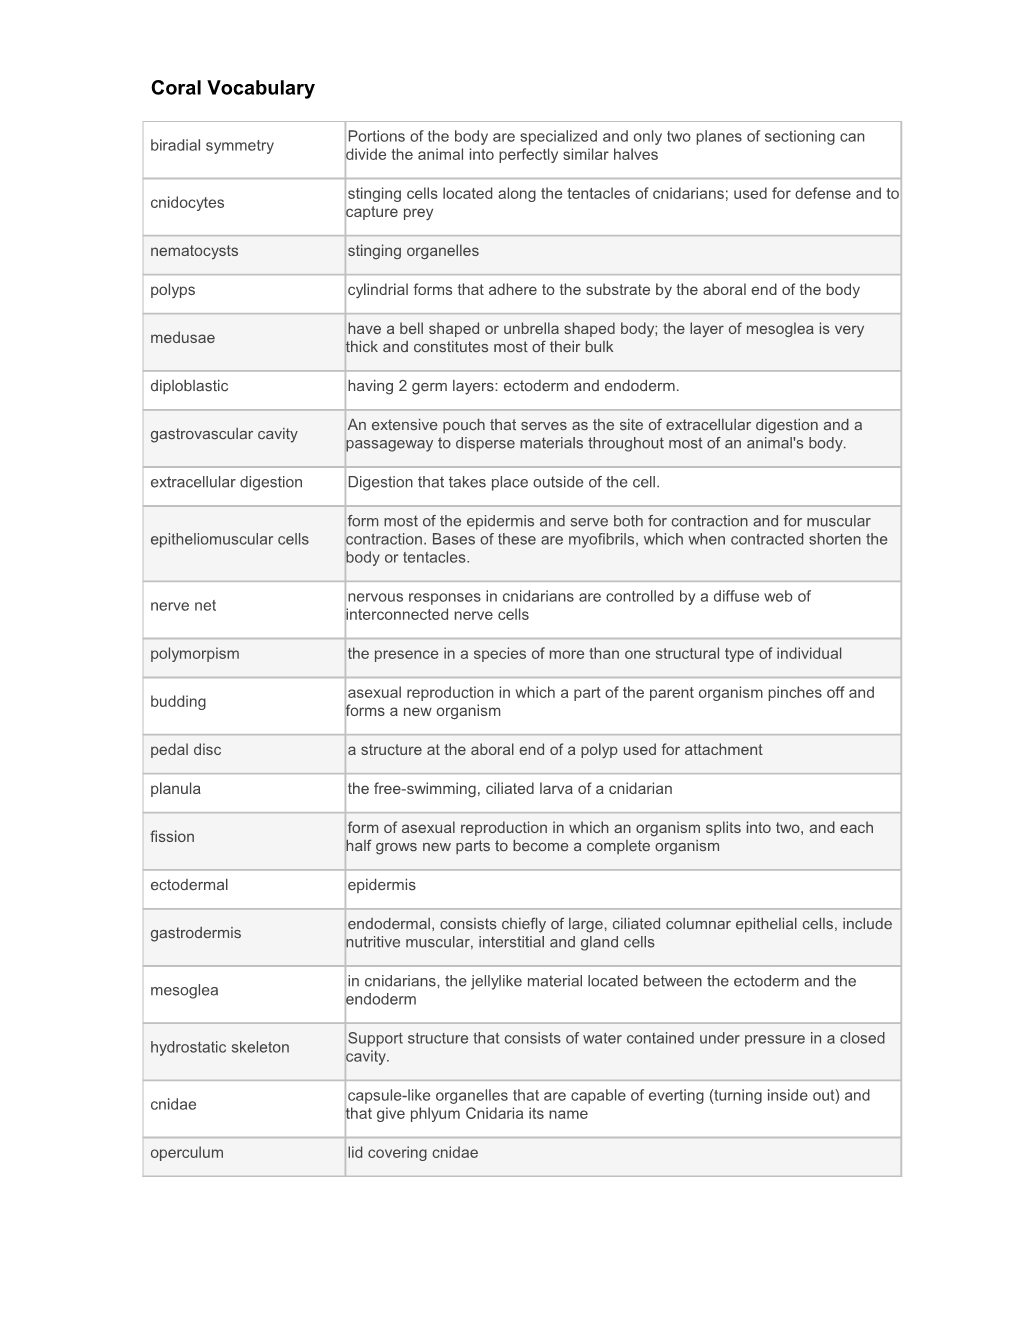 Coral Vocabulary